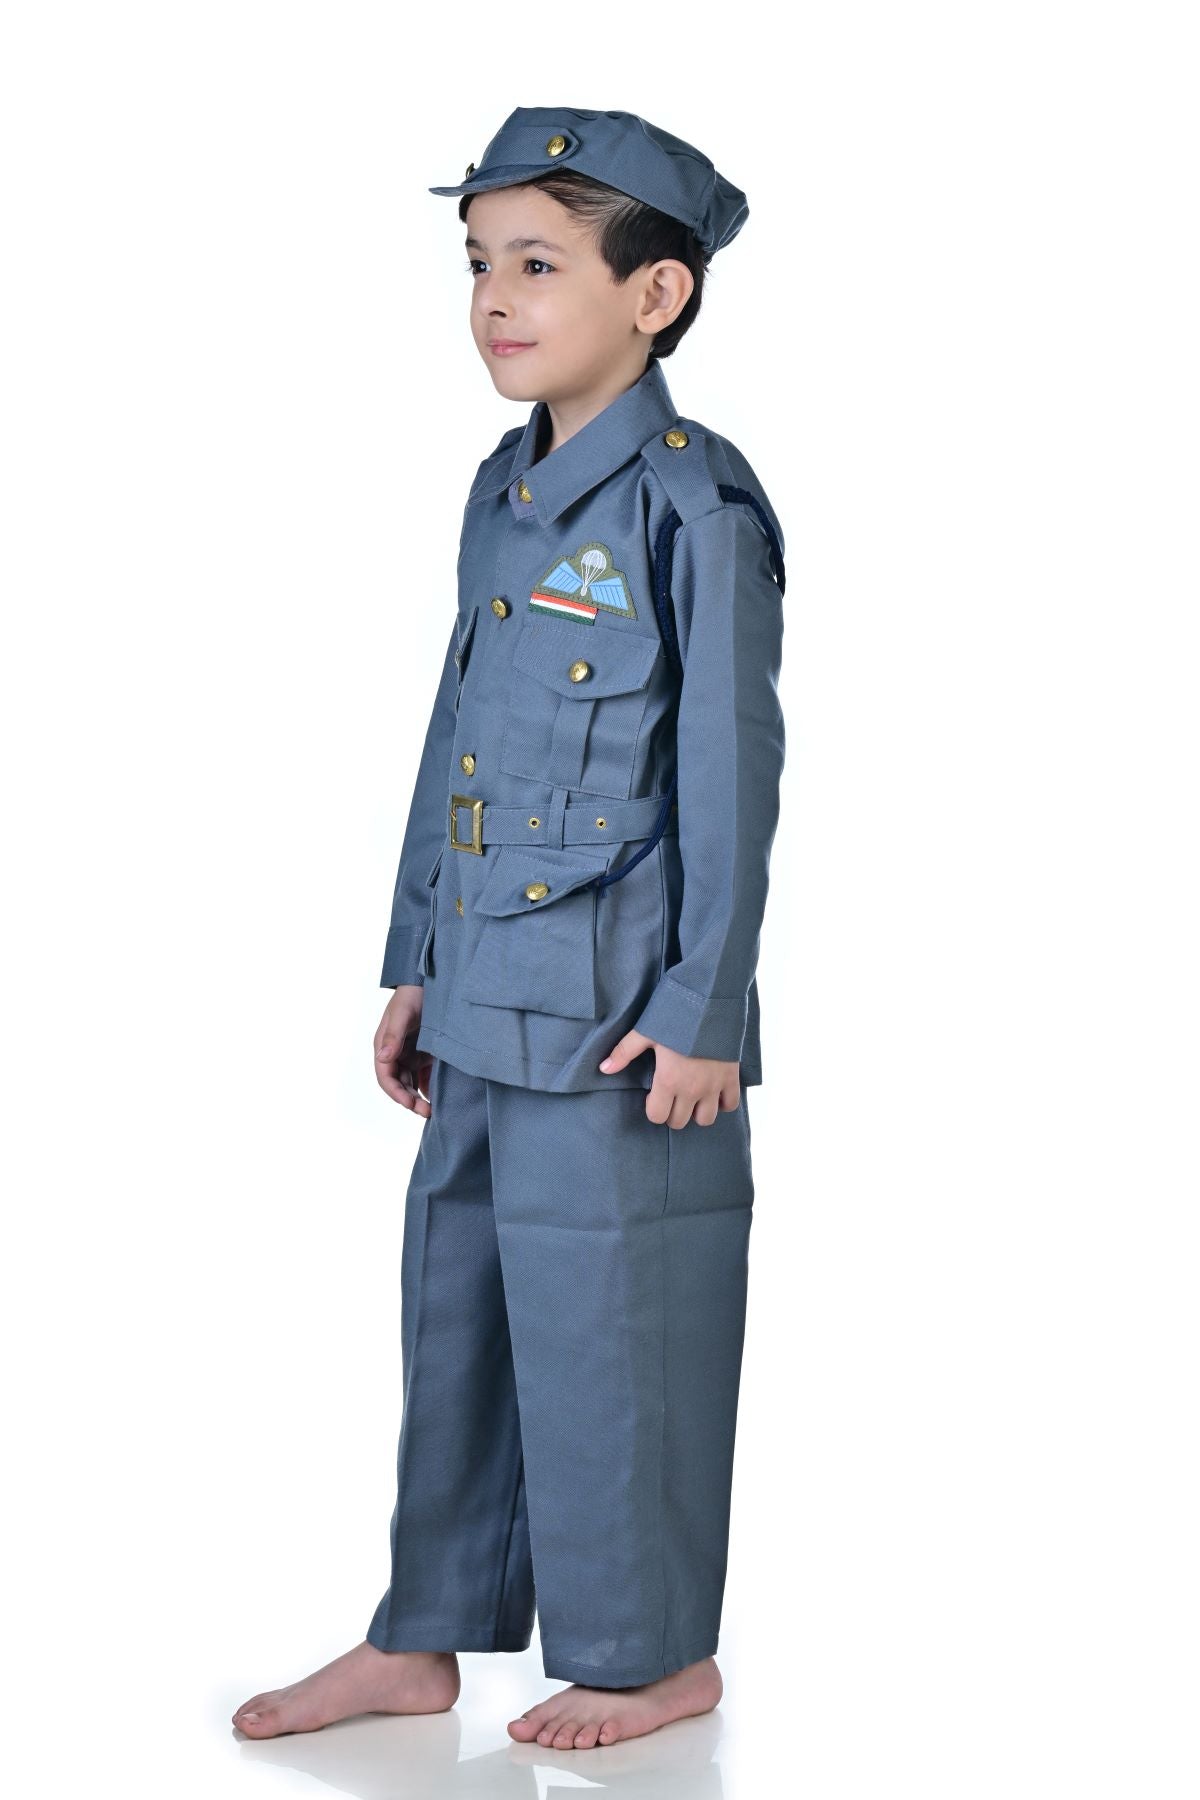 Rent Buy New Indian Air Force Defense Pilot Kids Fancy Dress Costume